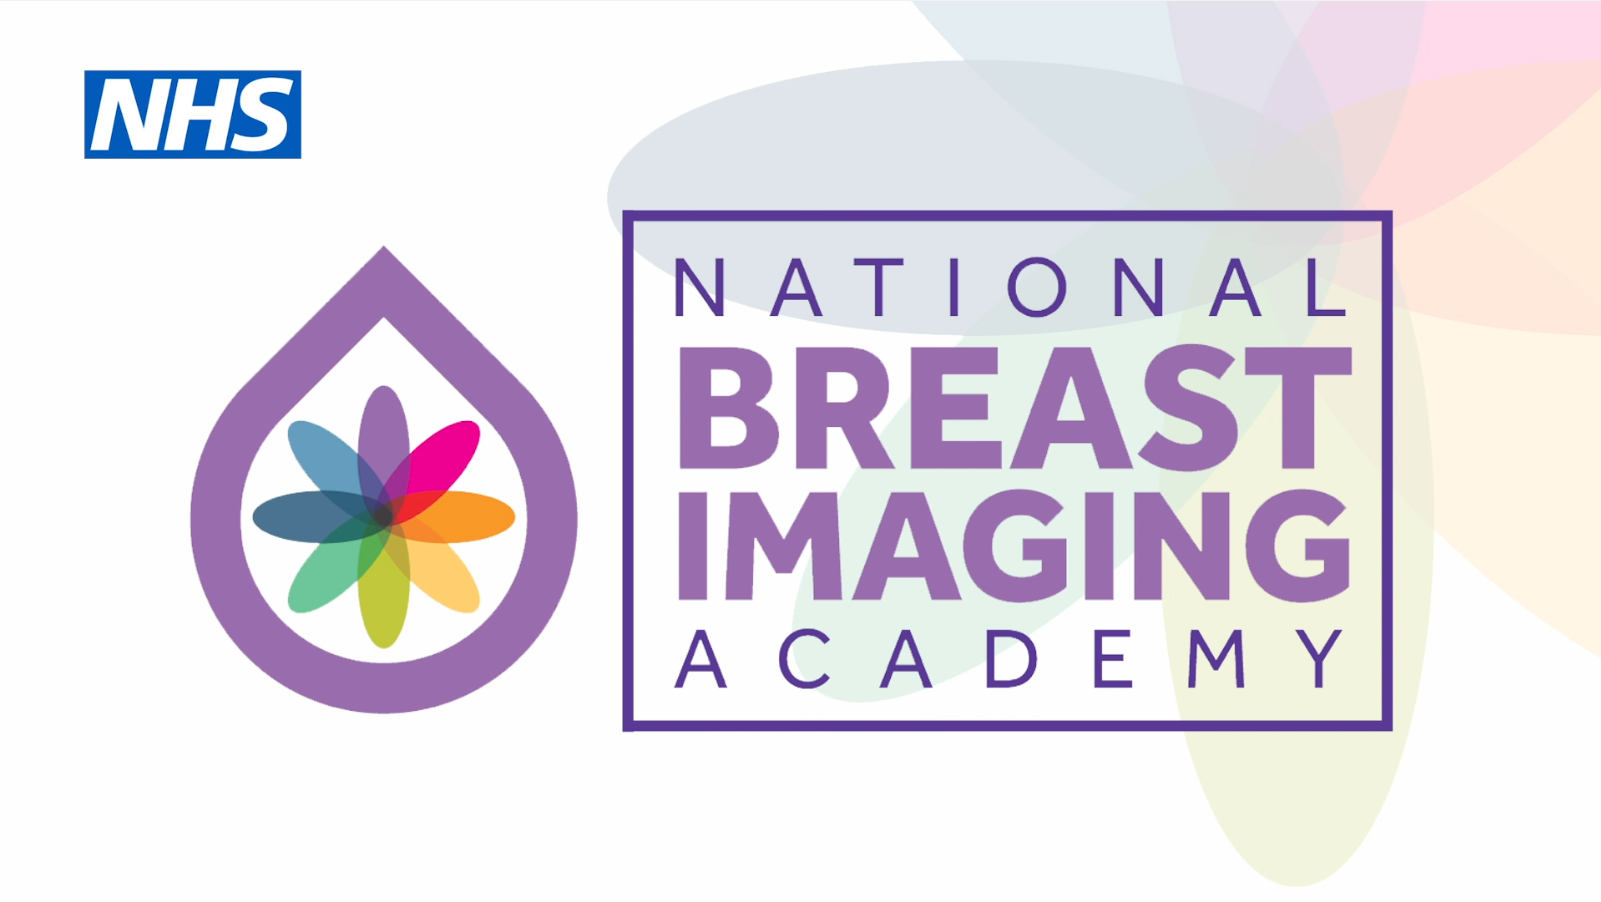 NBIA bursary winners set to boost breast imaging training